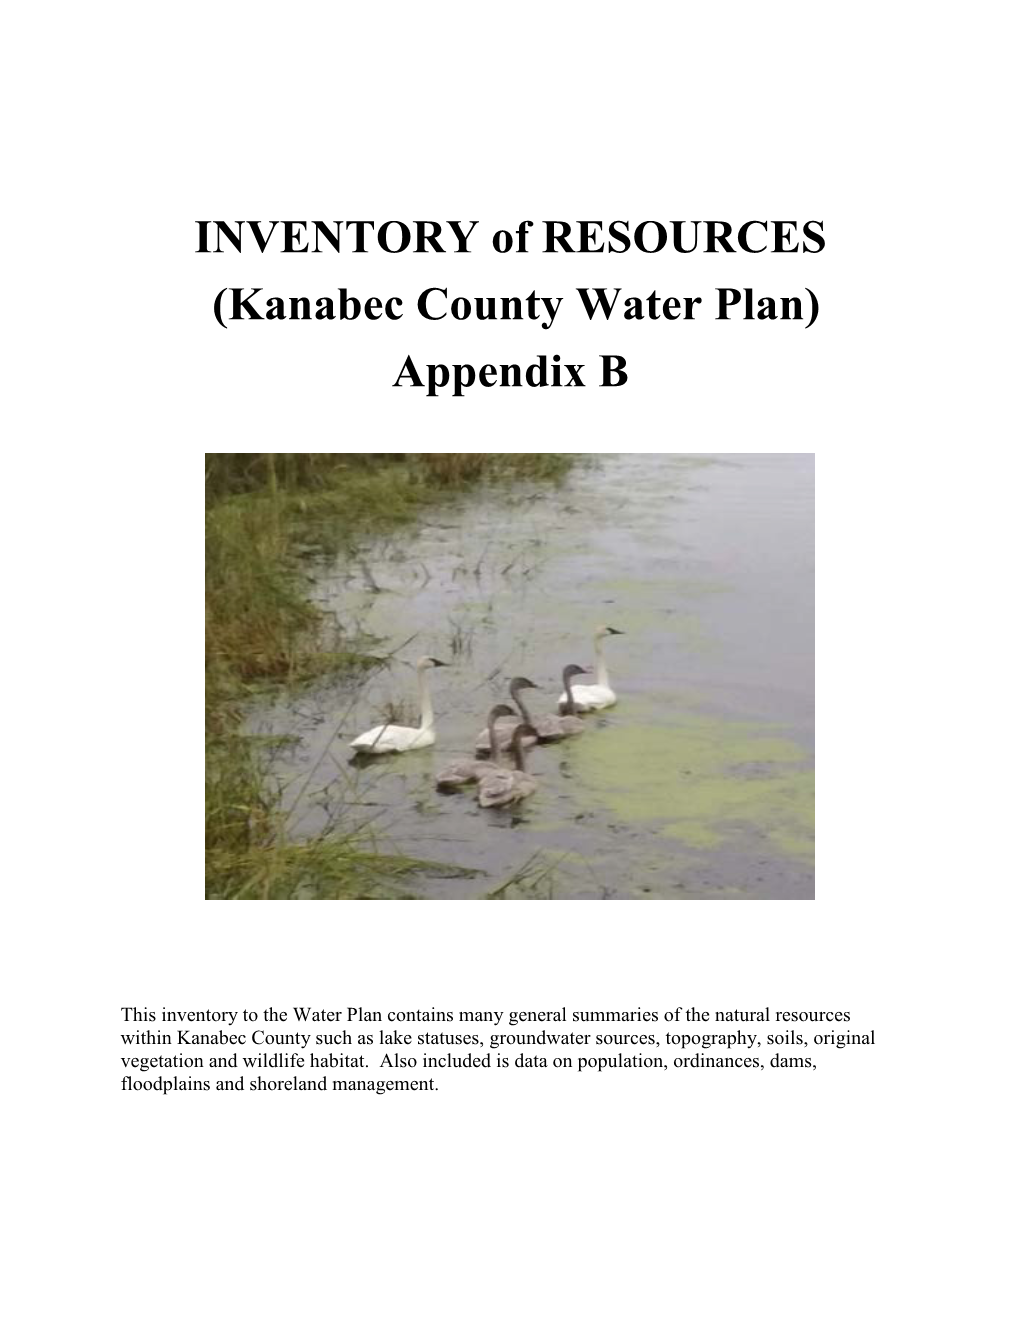 Kanabec County Water Plan) Appendix B